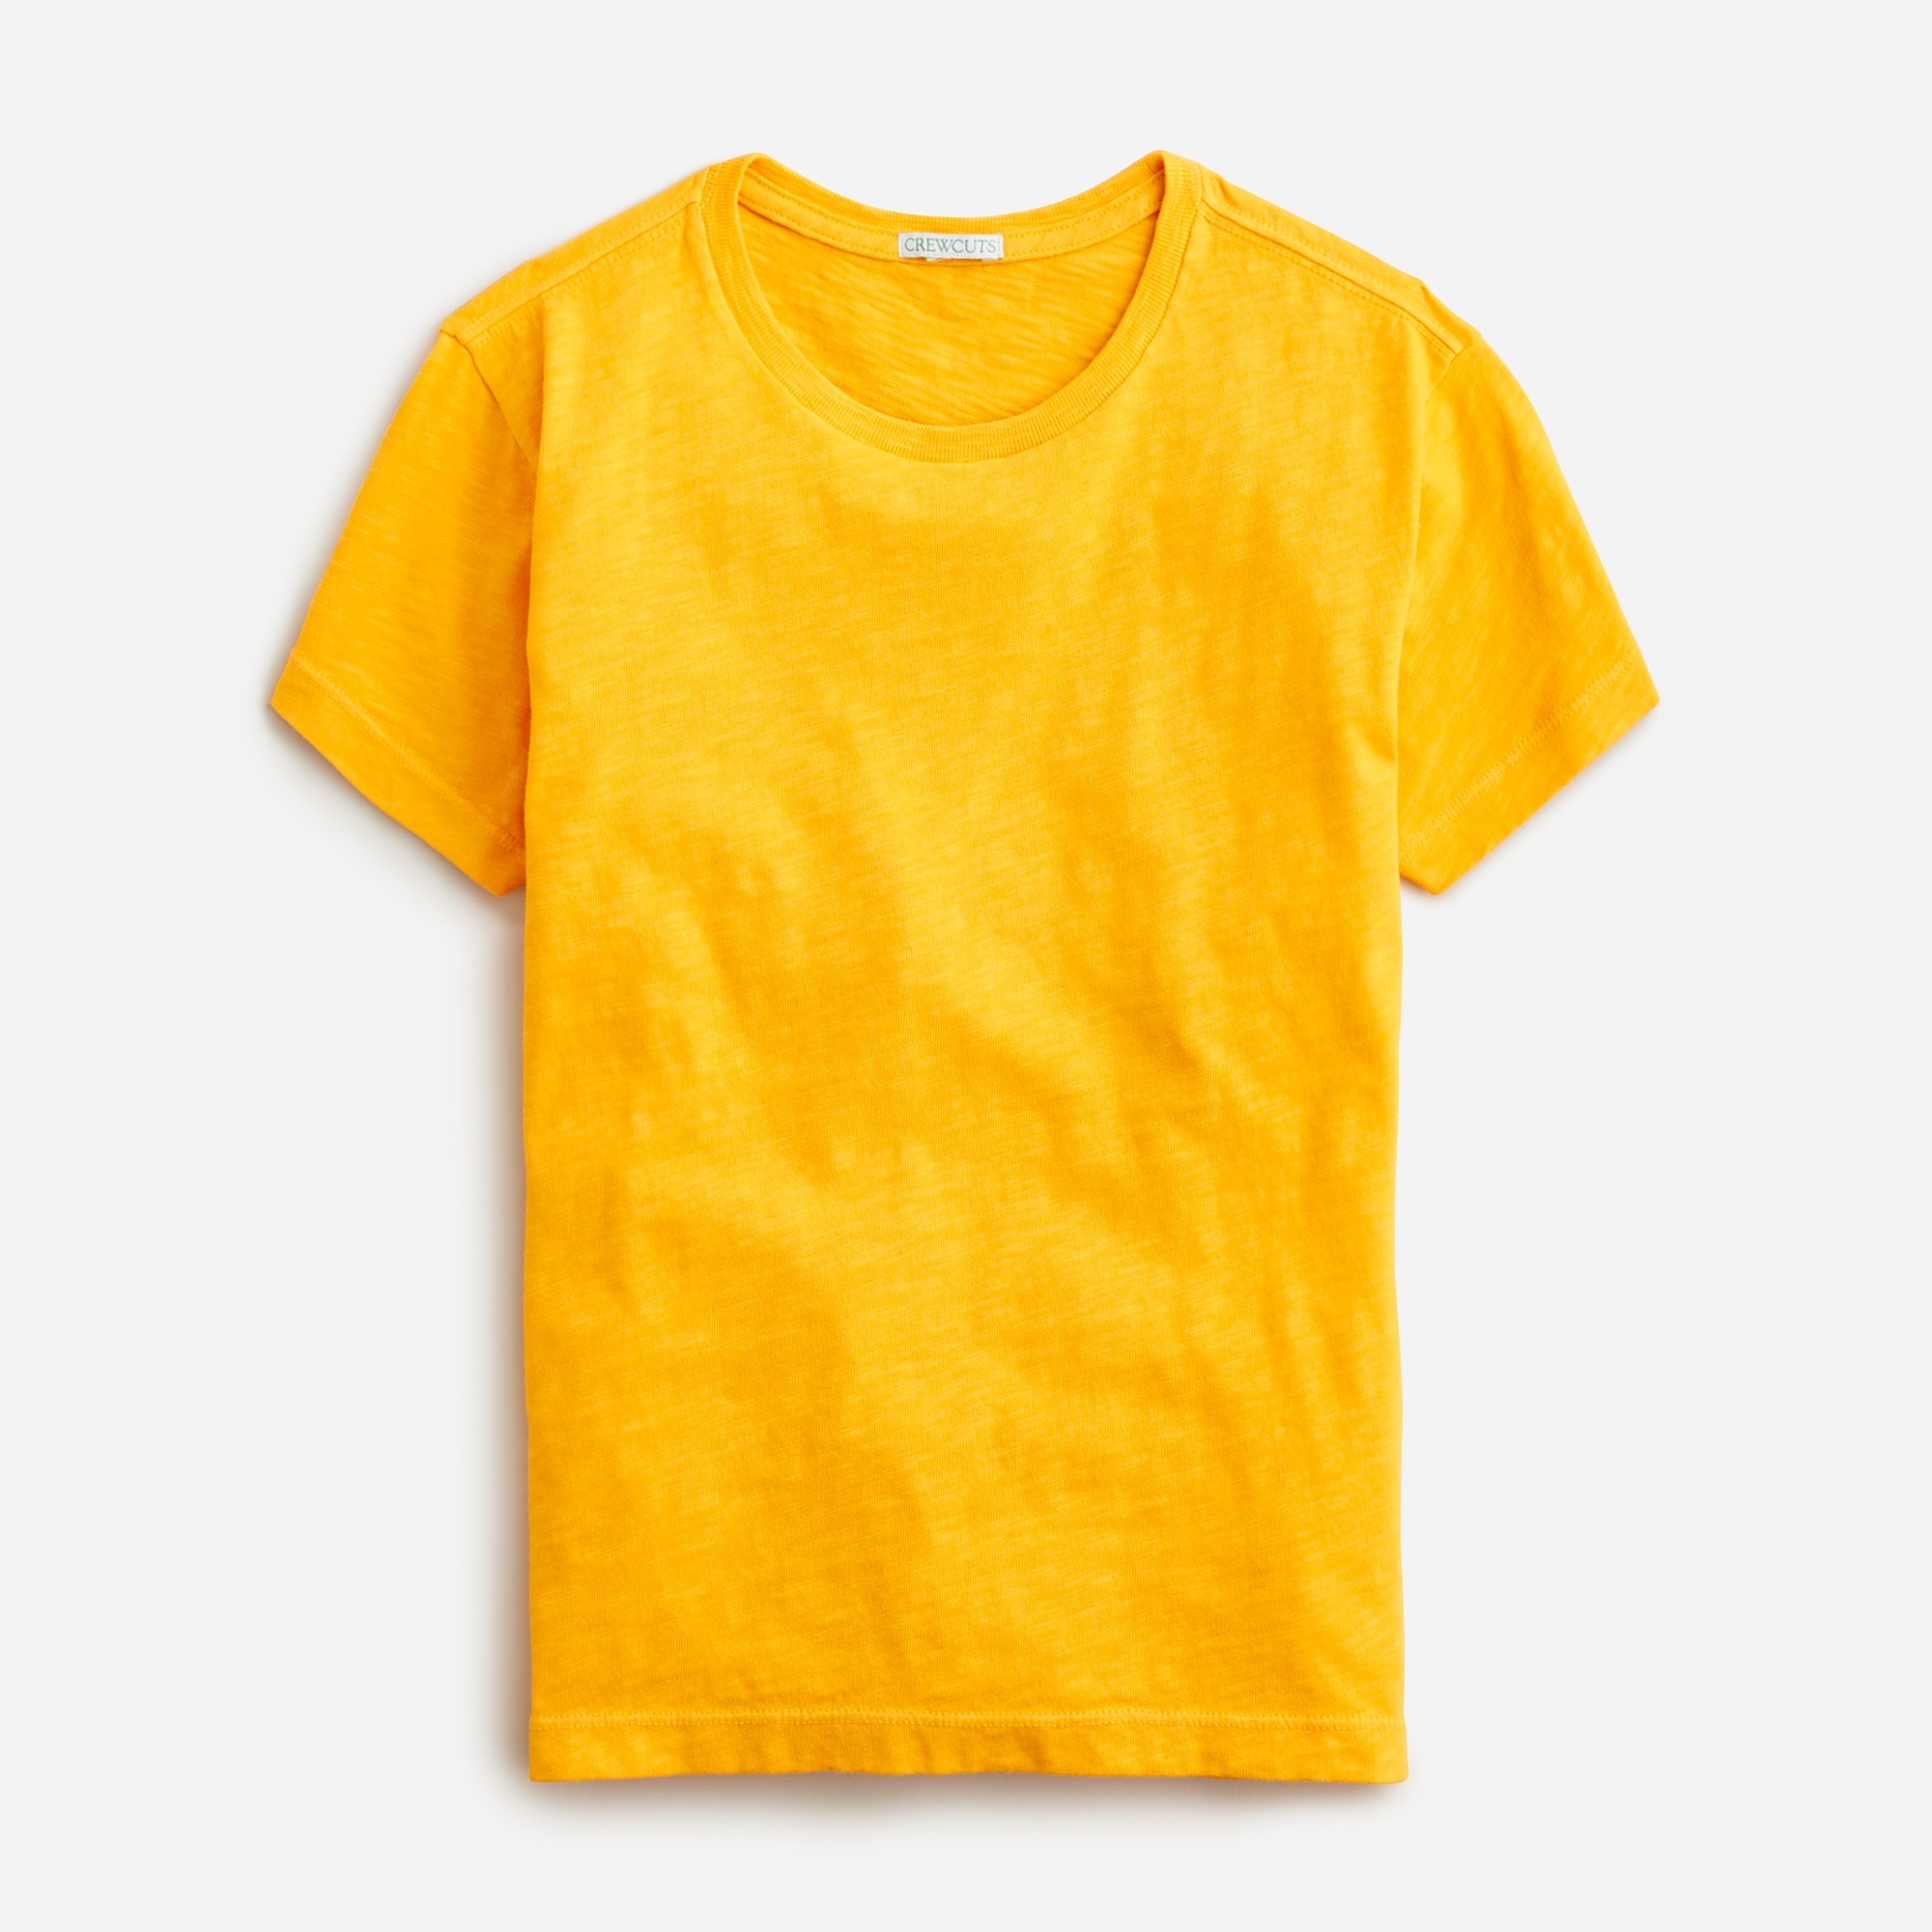  KID by crewcuts garment-dyed short-sleeve T-shirt